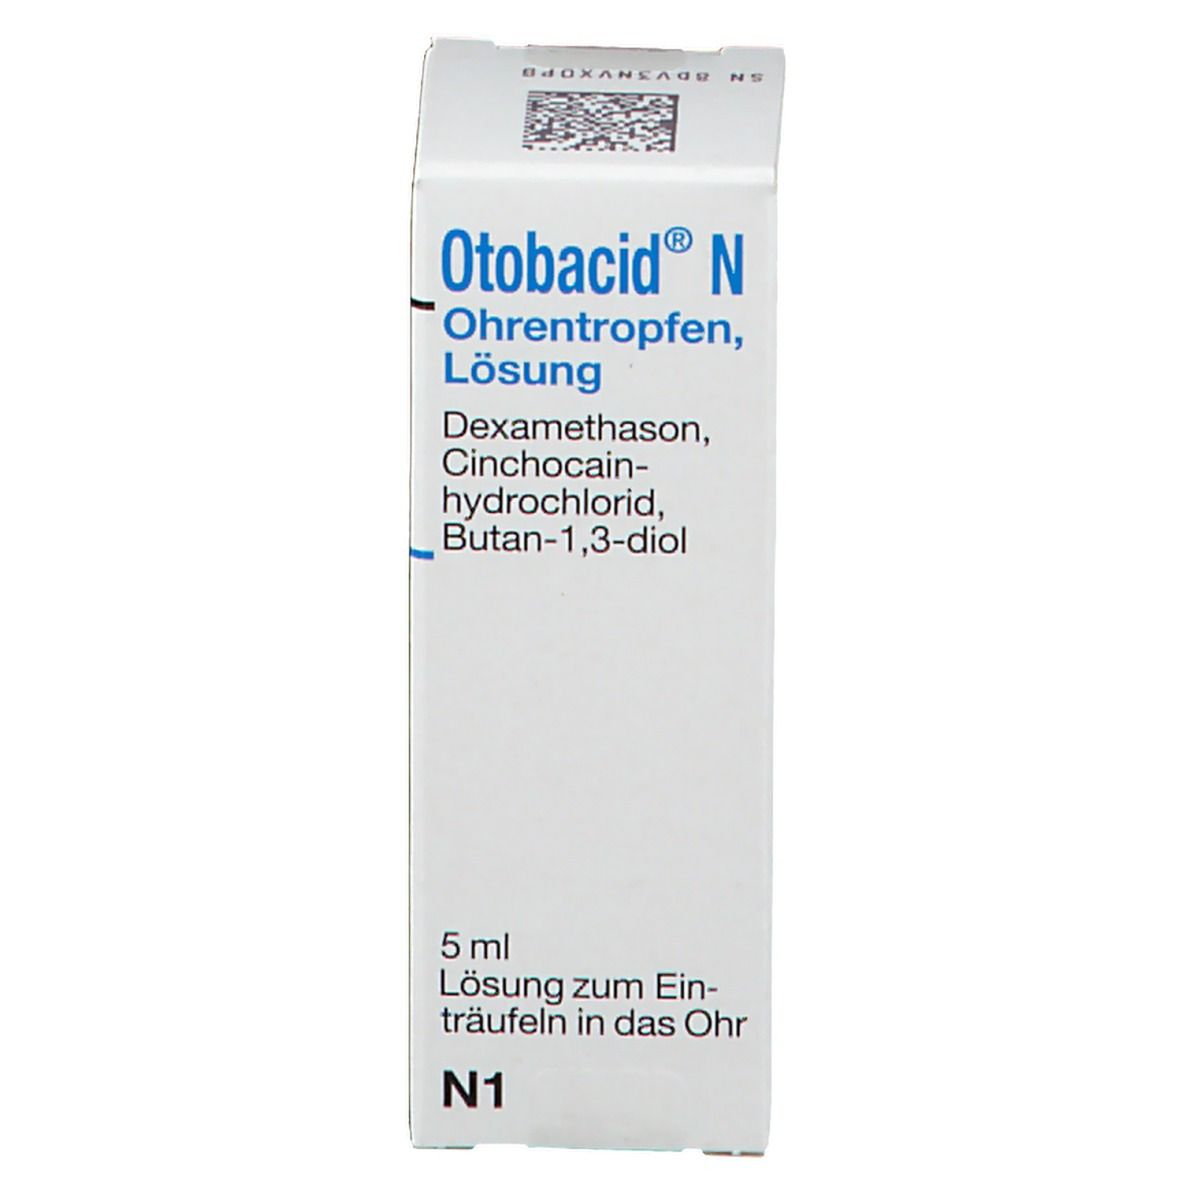 Otobacid® N